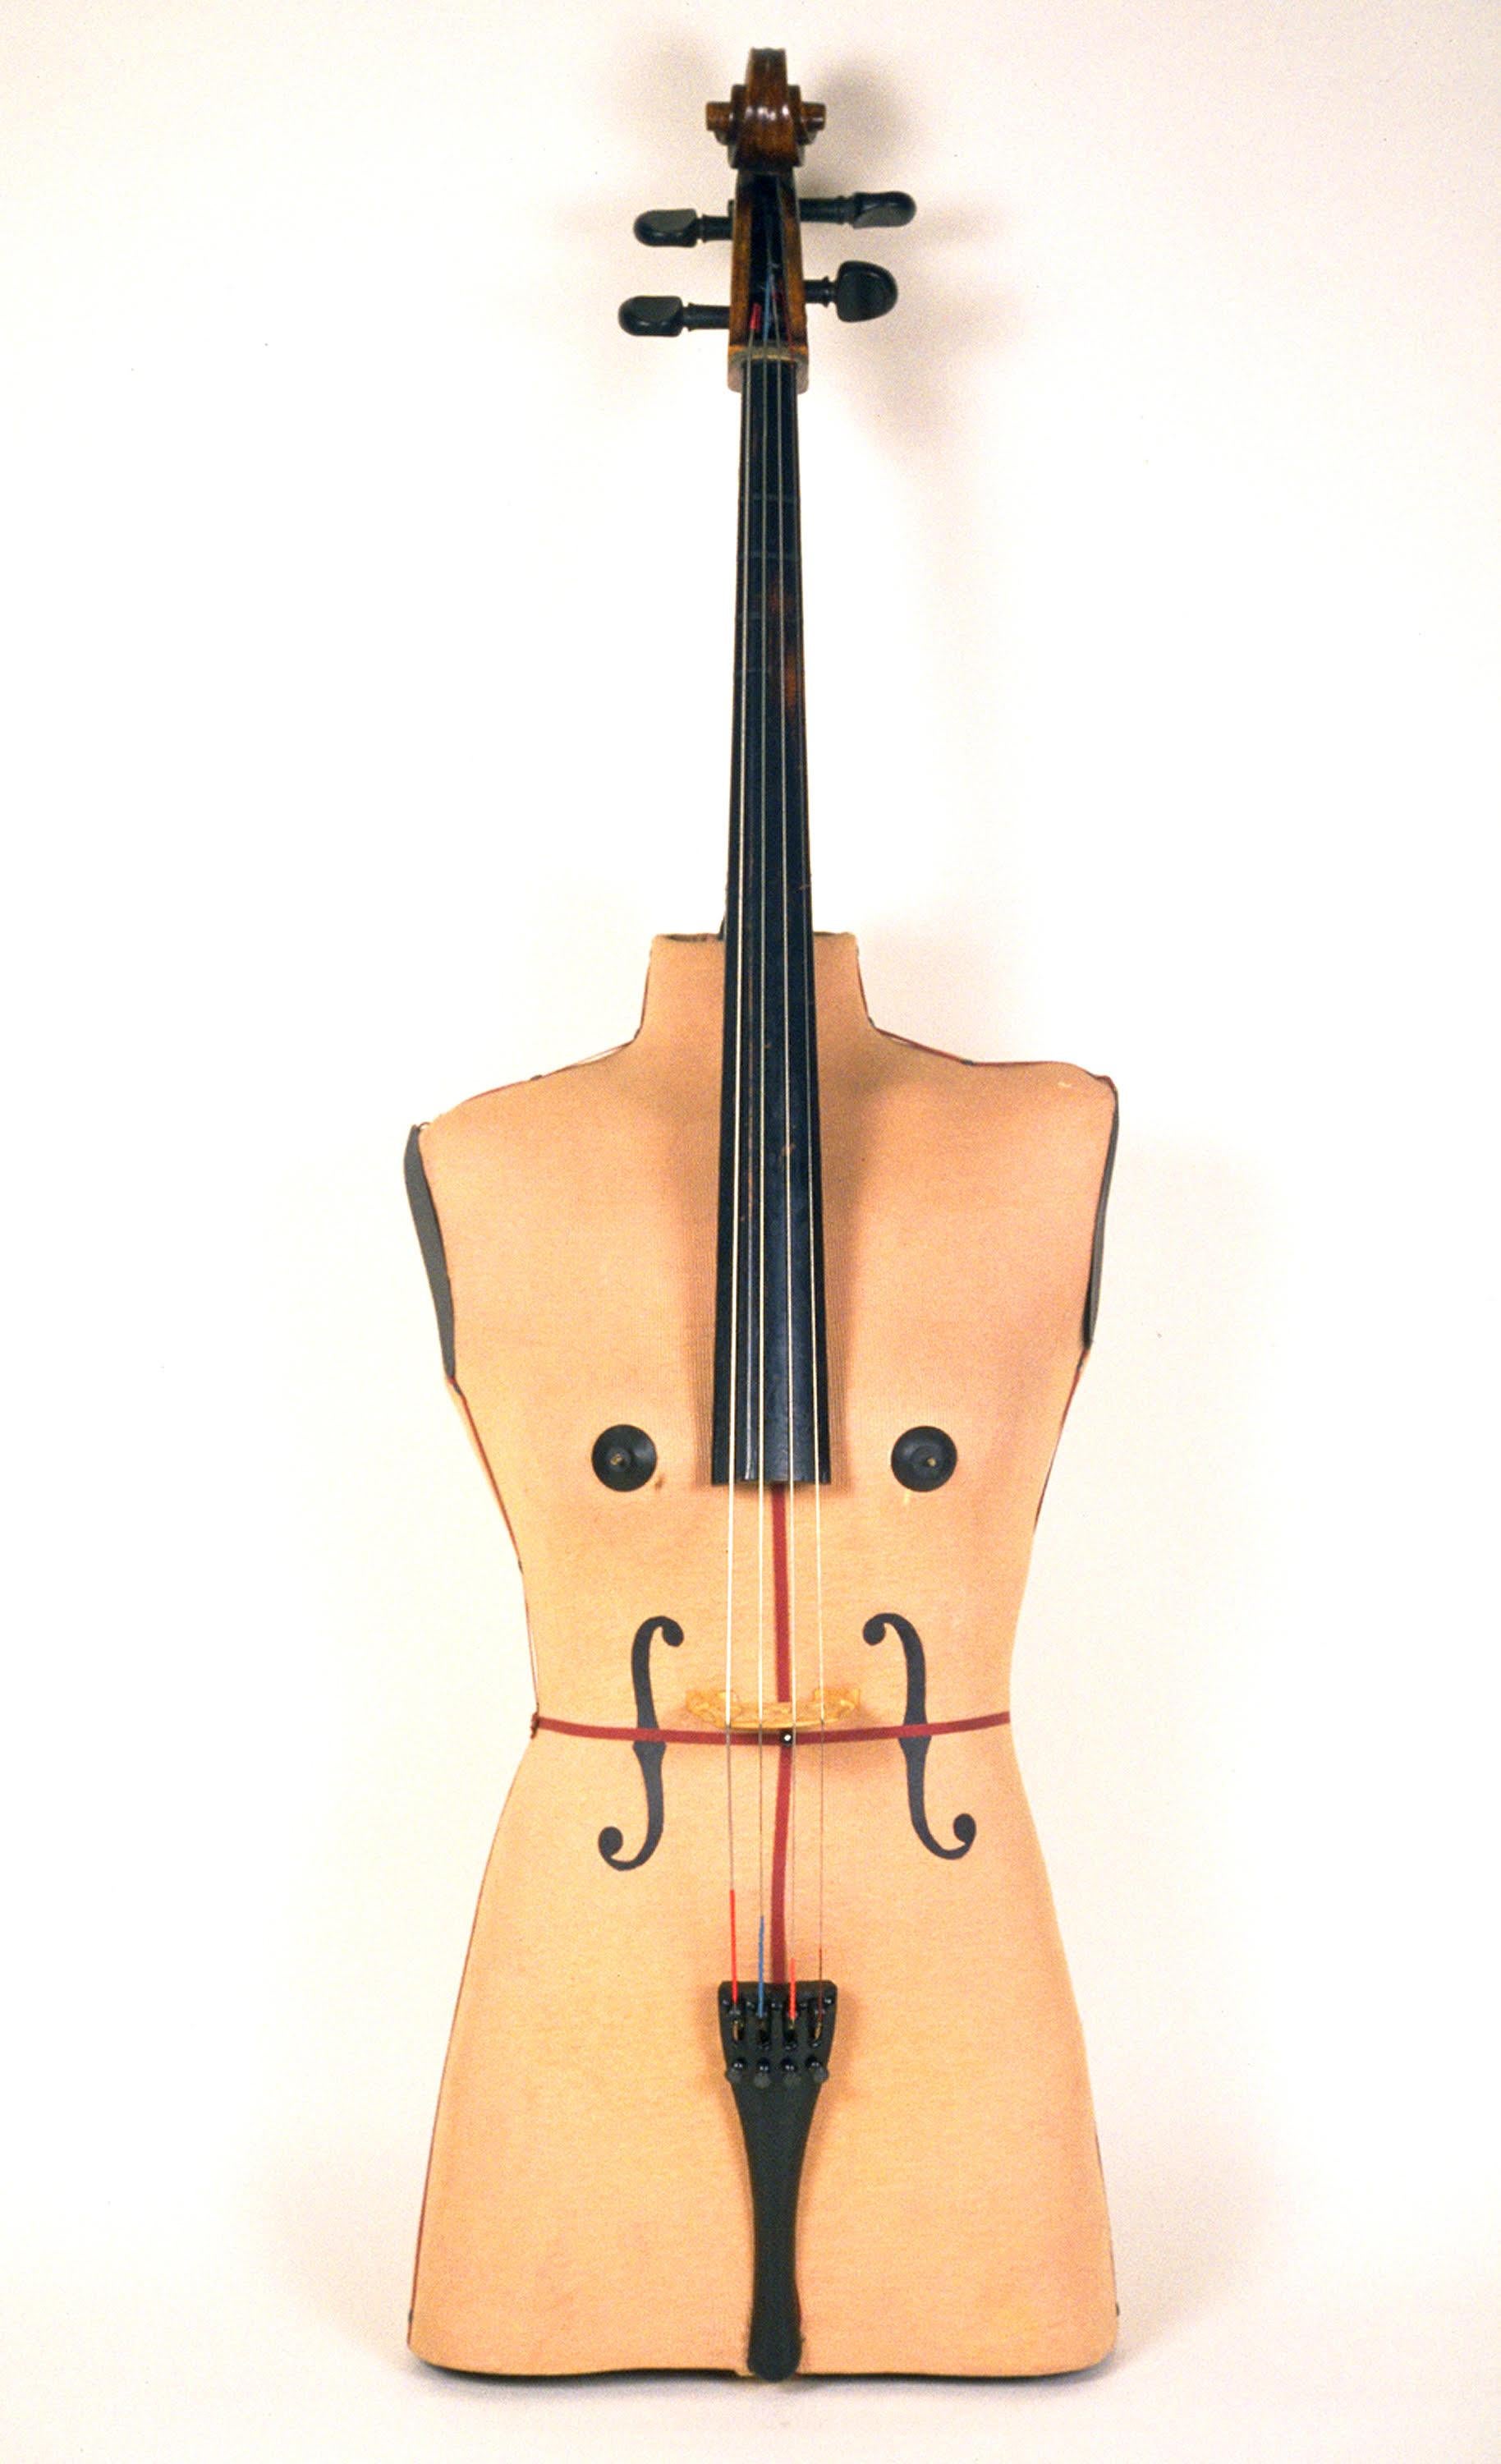 "Torso Cello" hybrid musical instrument sculpture, assemblage - Mixed Media Art by Ken Butler